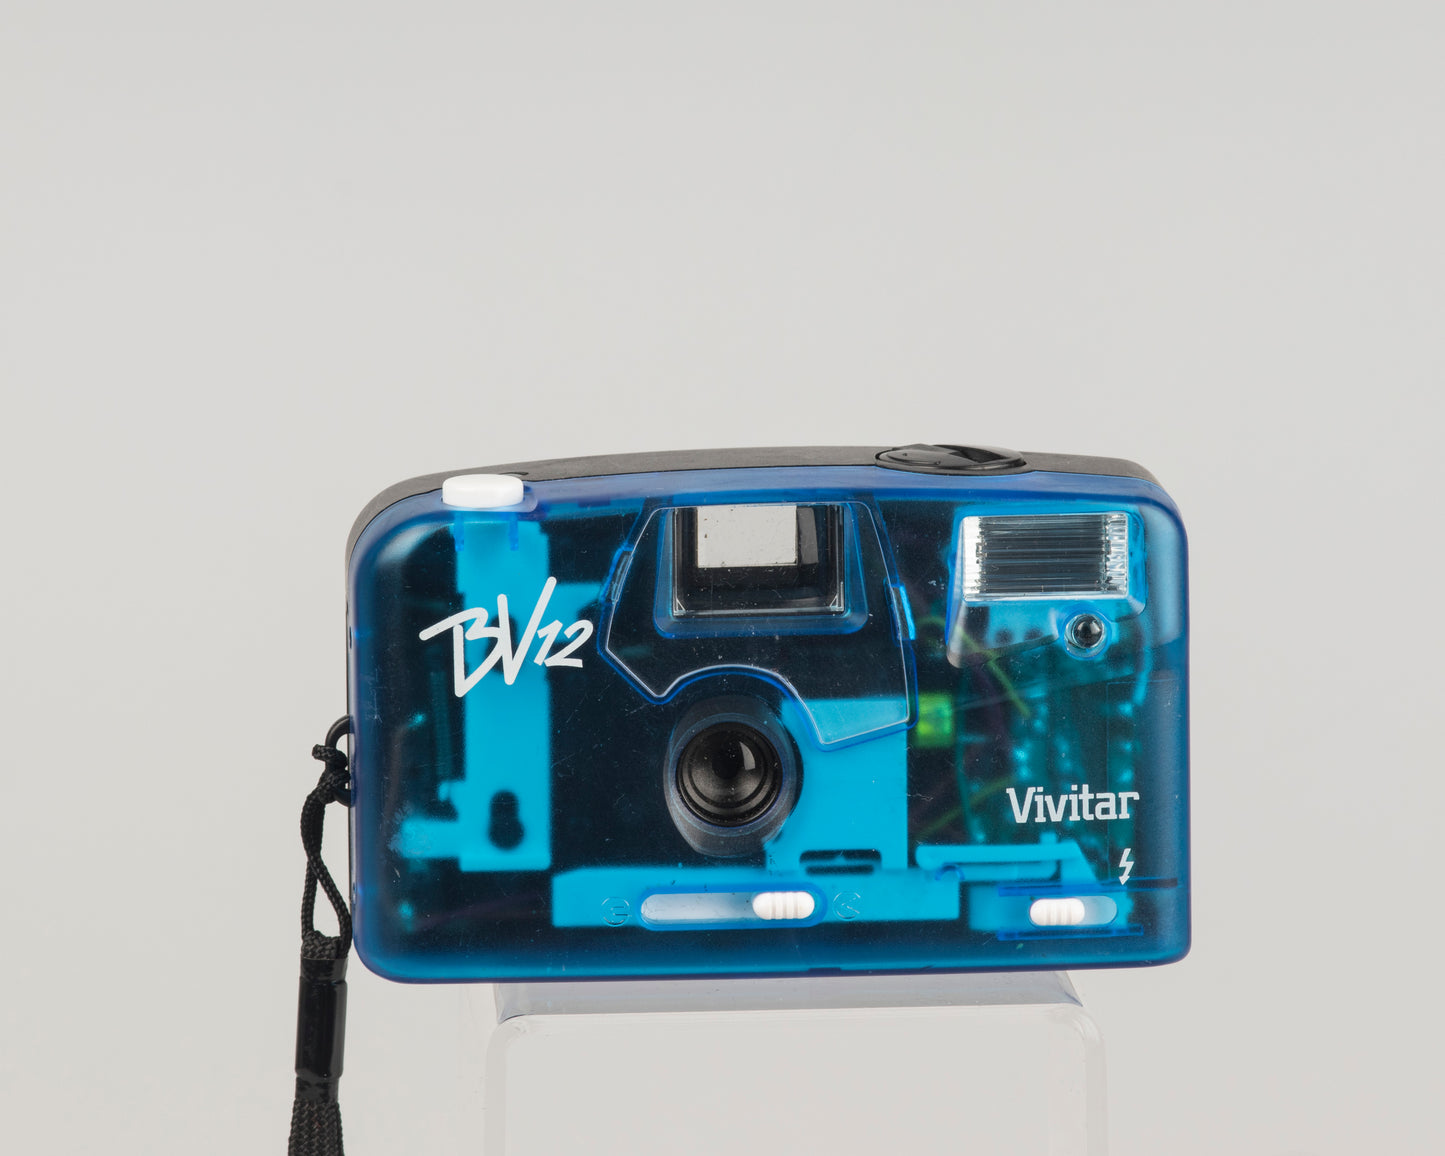 Vivitar BV12 35mm film camera